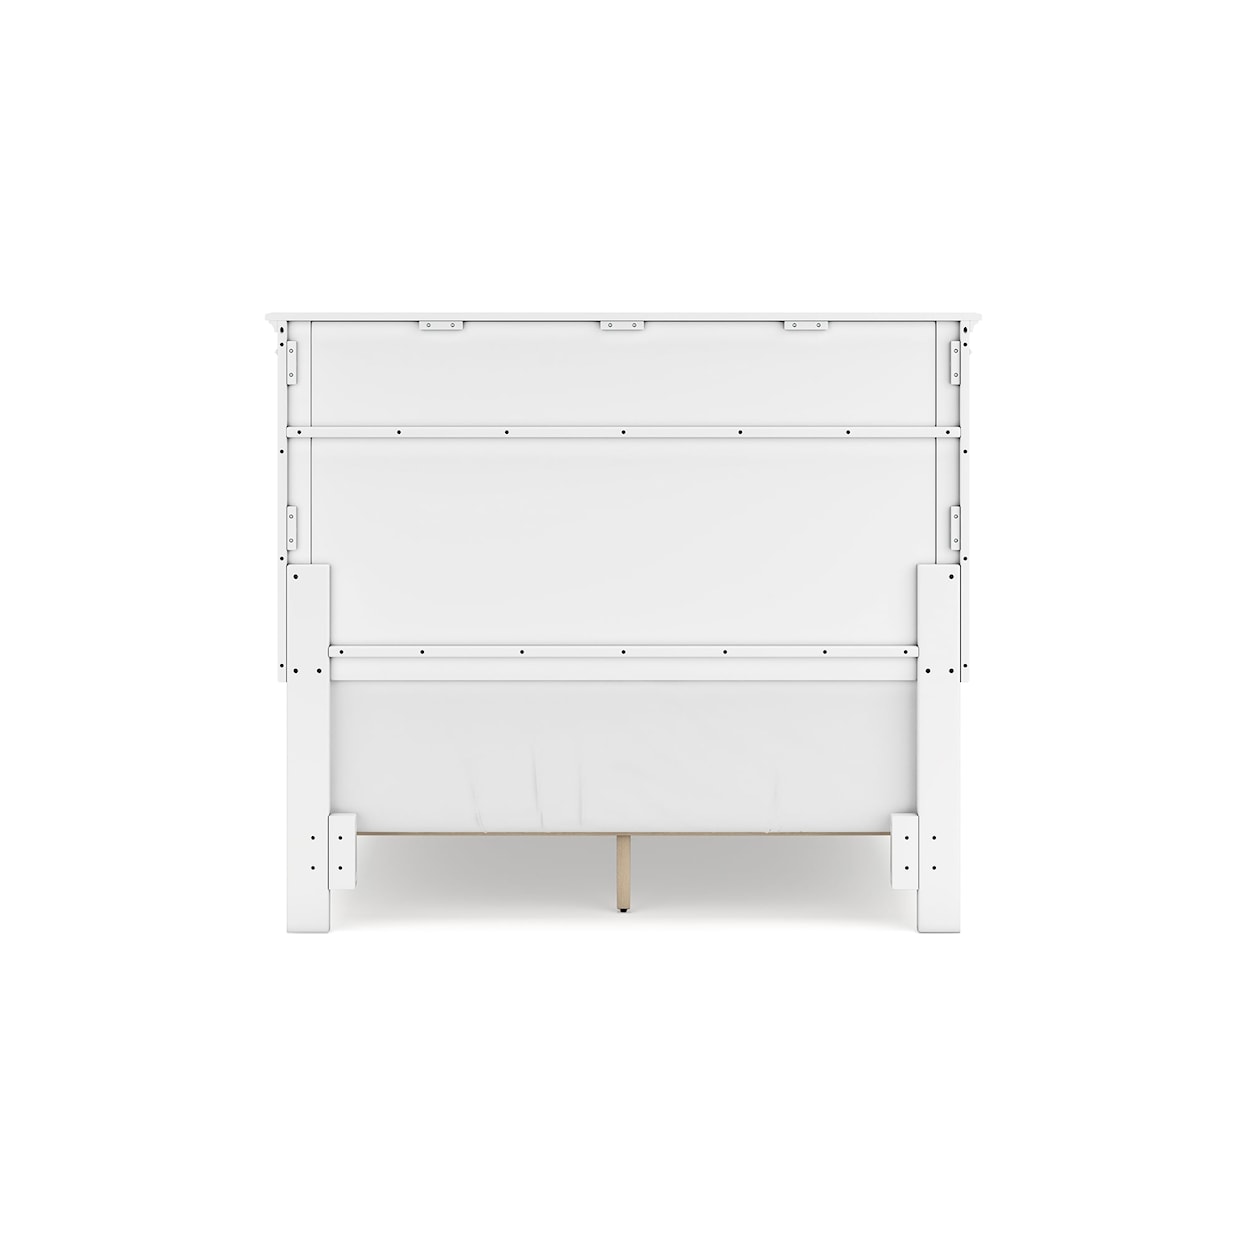 Benchcraft Fortman Full Panel Bed